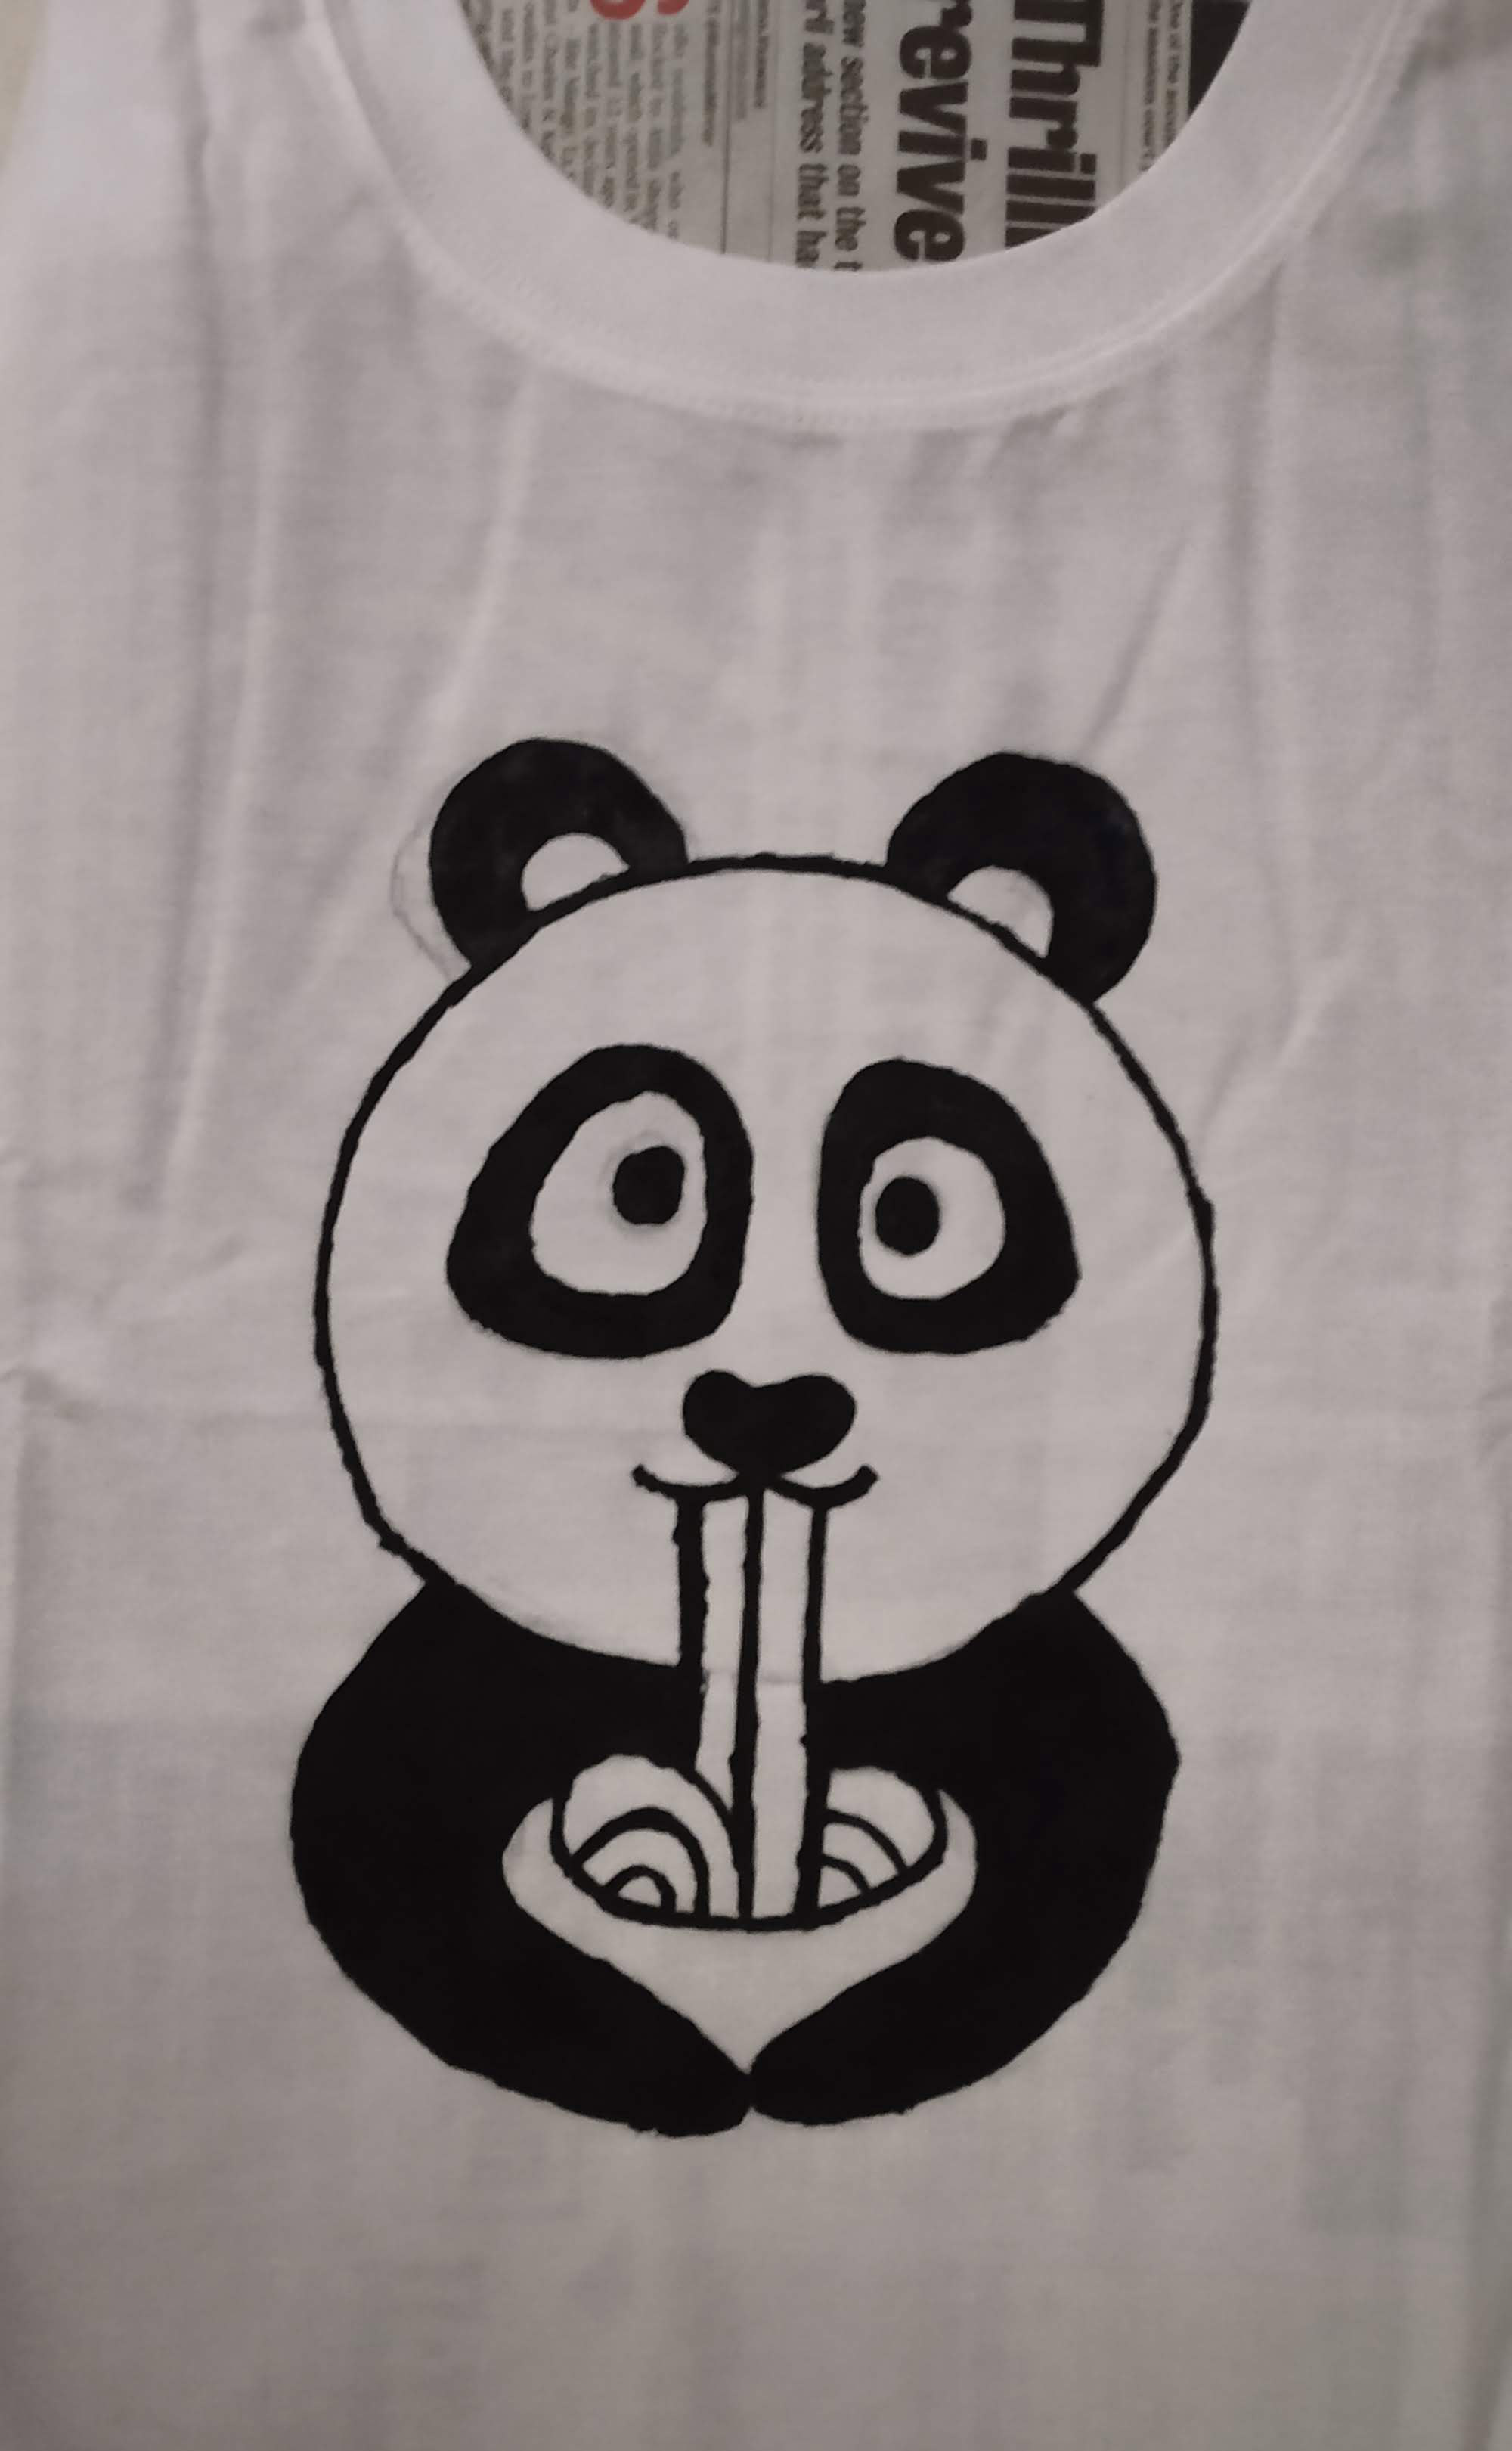 Food panda T-Shirt Painting